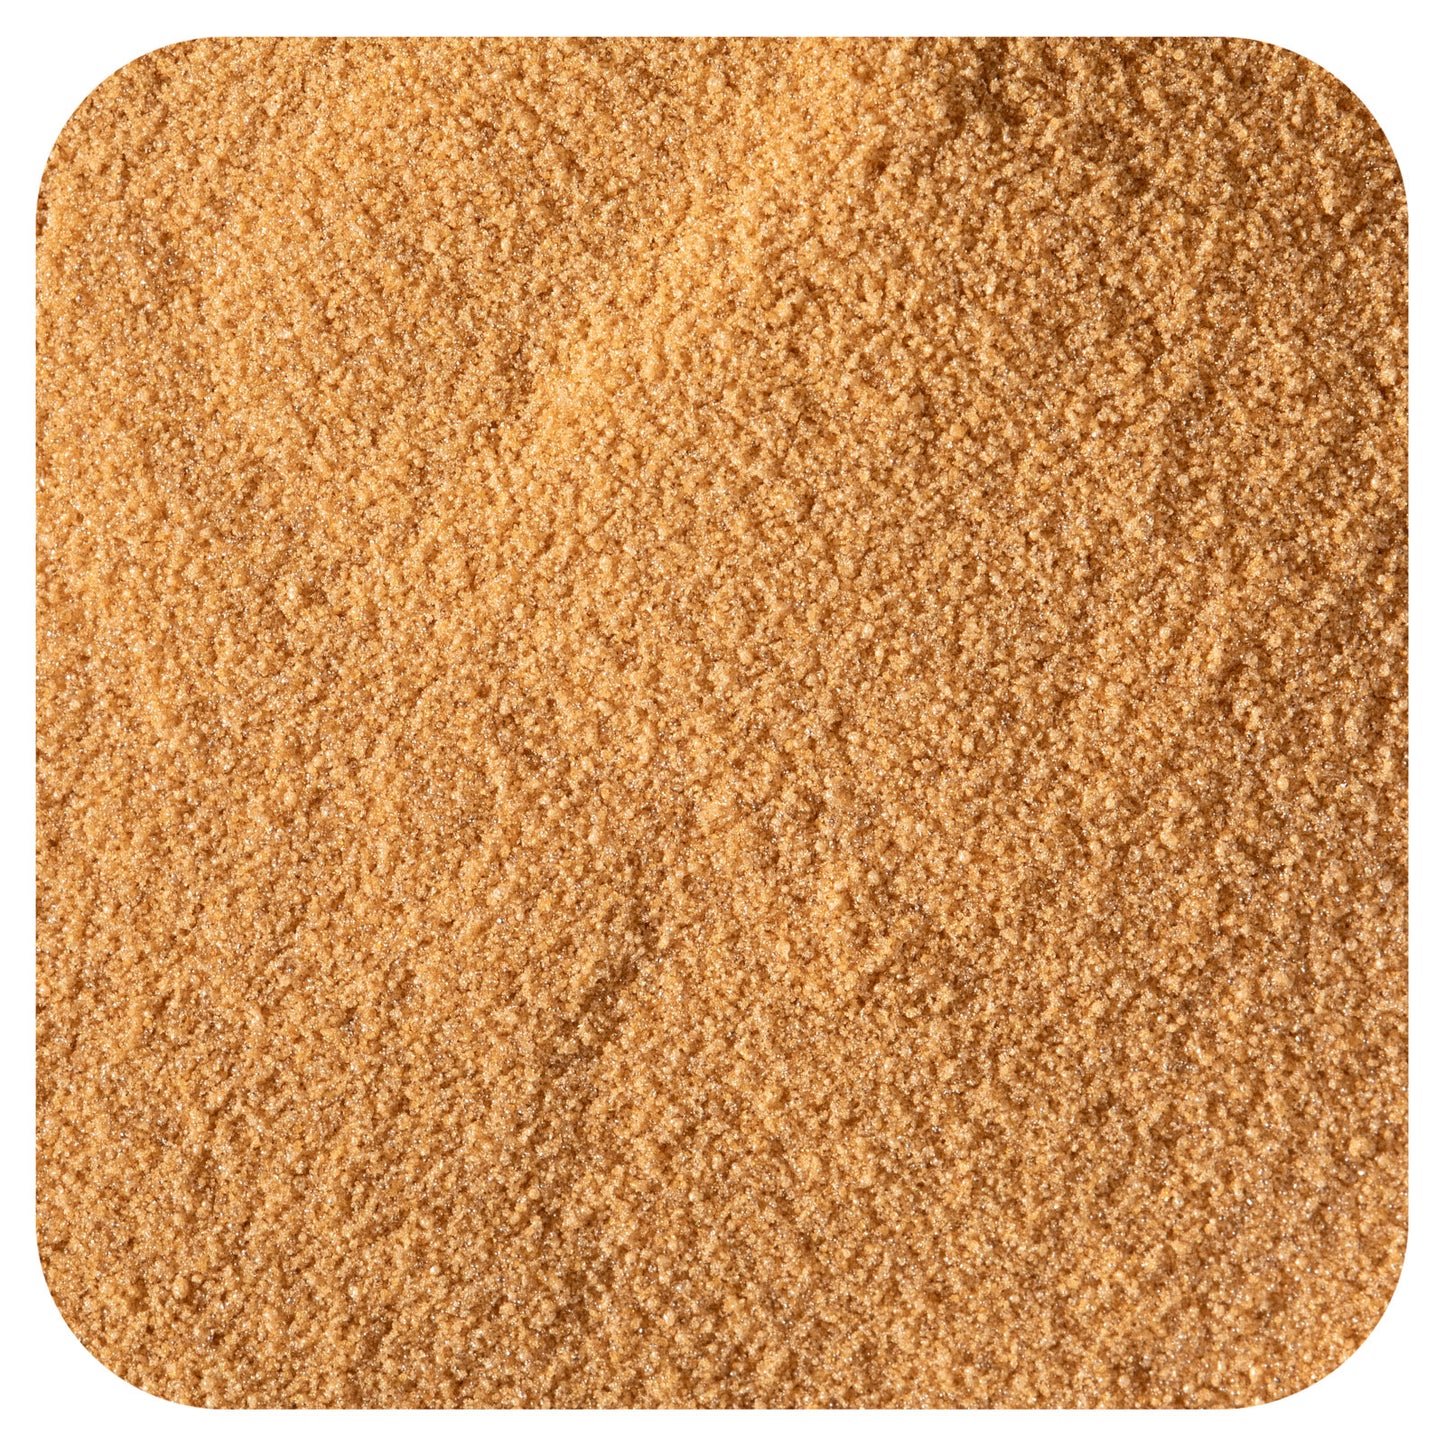 California Gold Nutrition, Superfoods, Kombucha Powder Plus Probiotics, 5.64 oz (160 g)